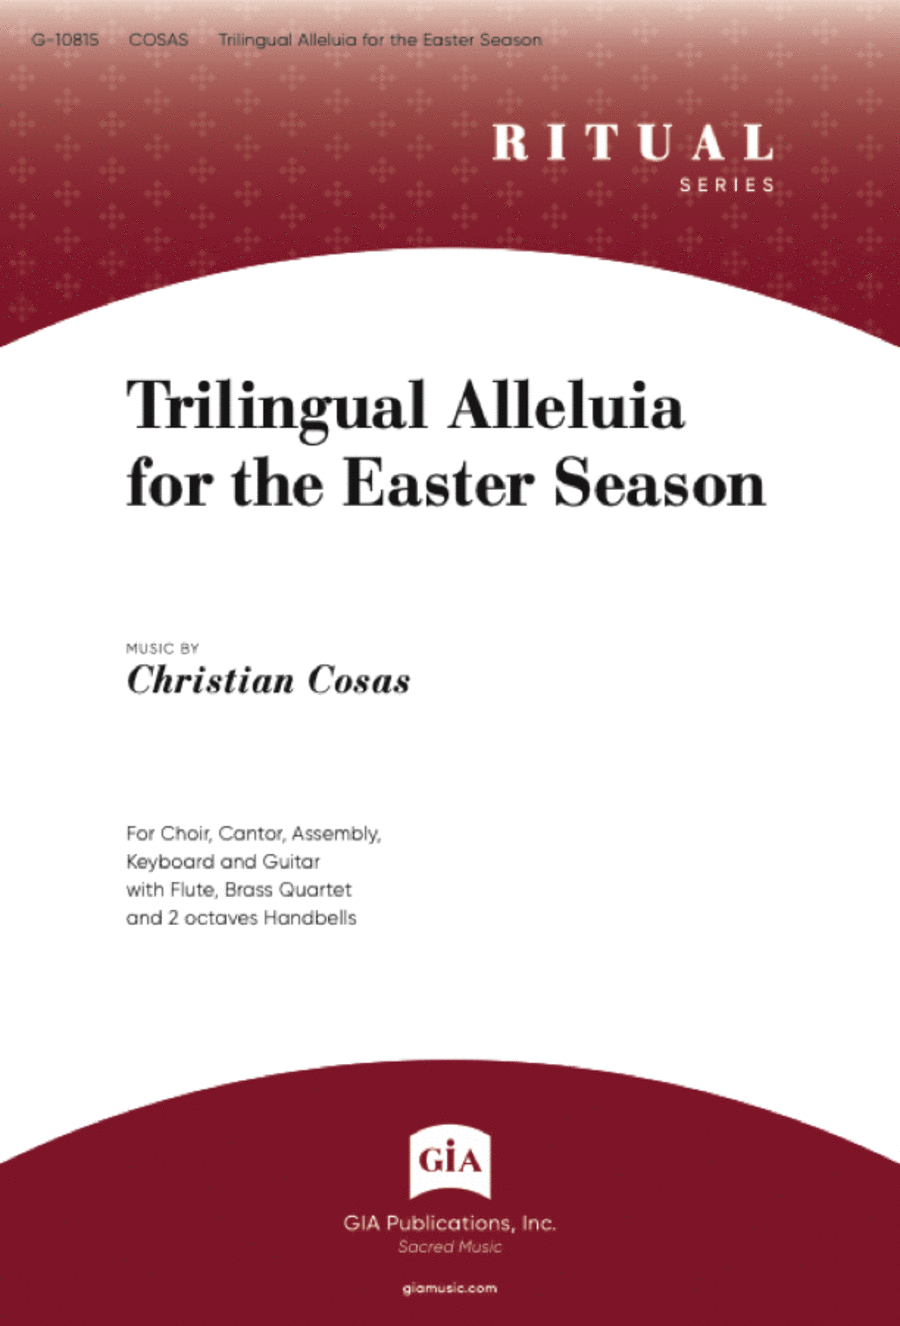 Trilingual Alleluia for the Easter Season - Guitar edition